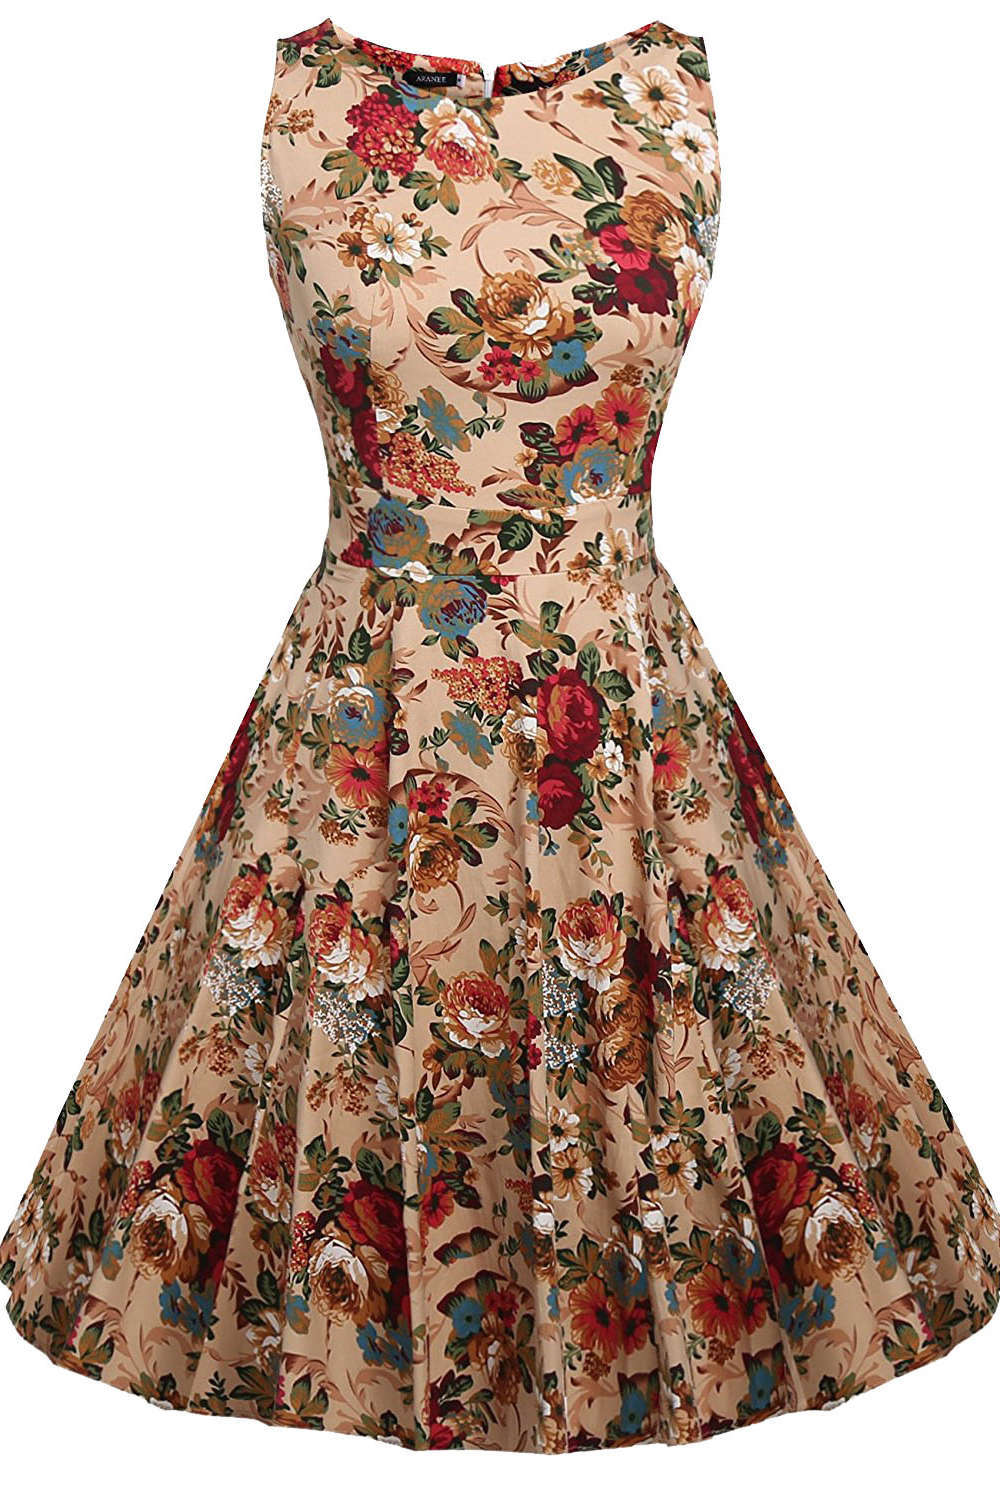 Iyasson Floral Sleeveless Mini Dress